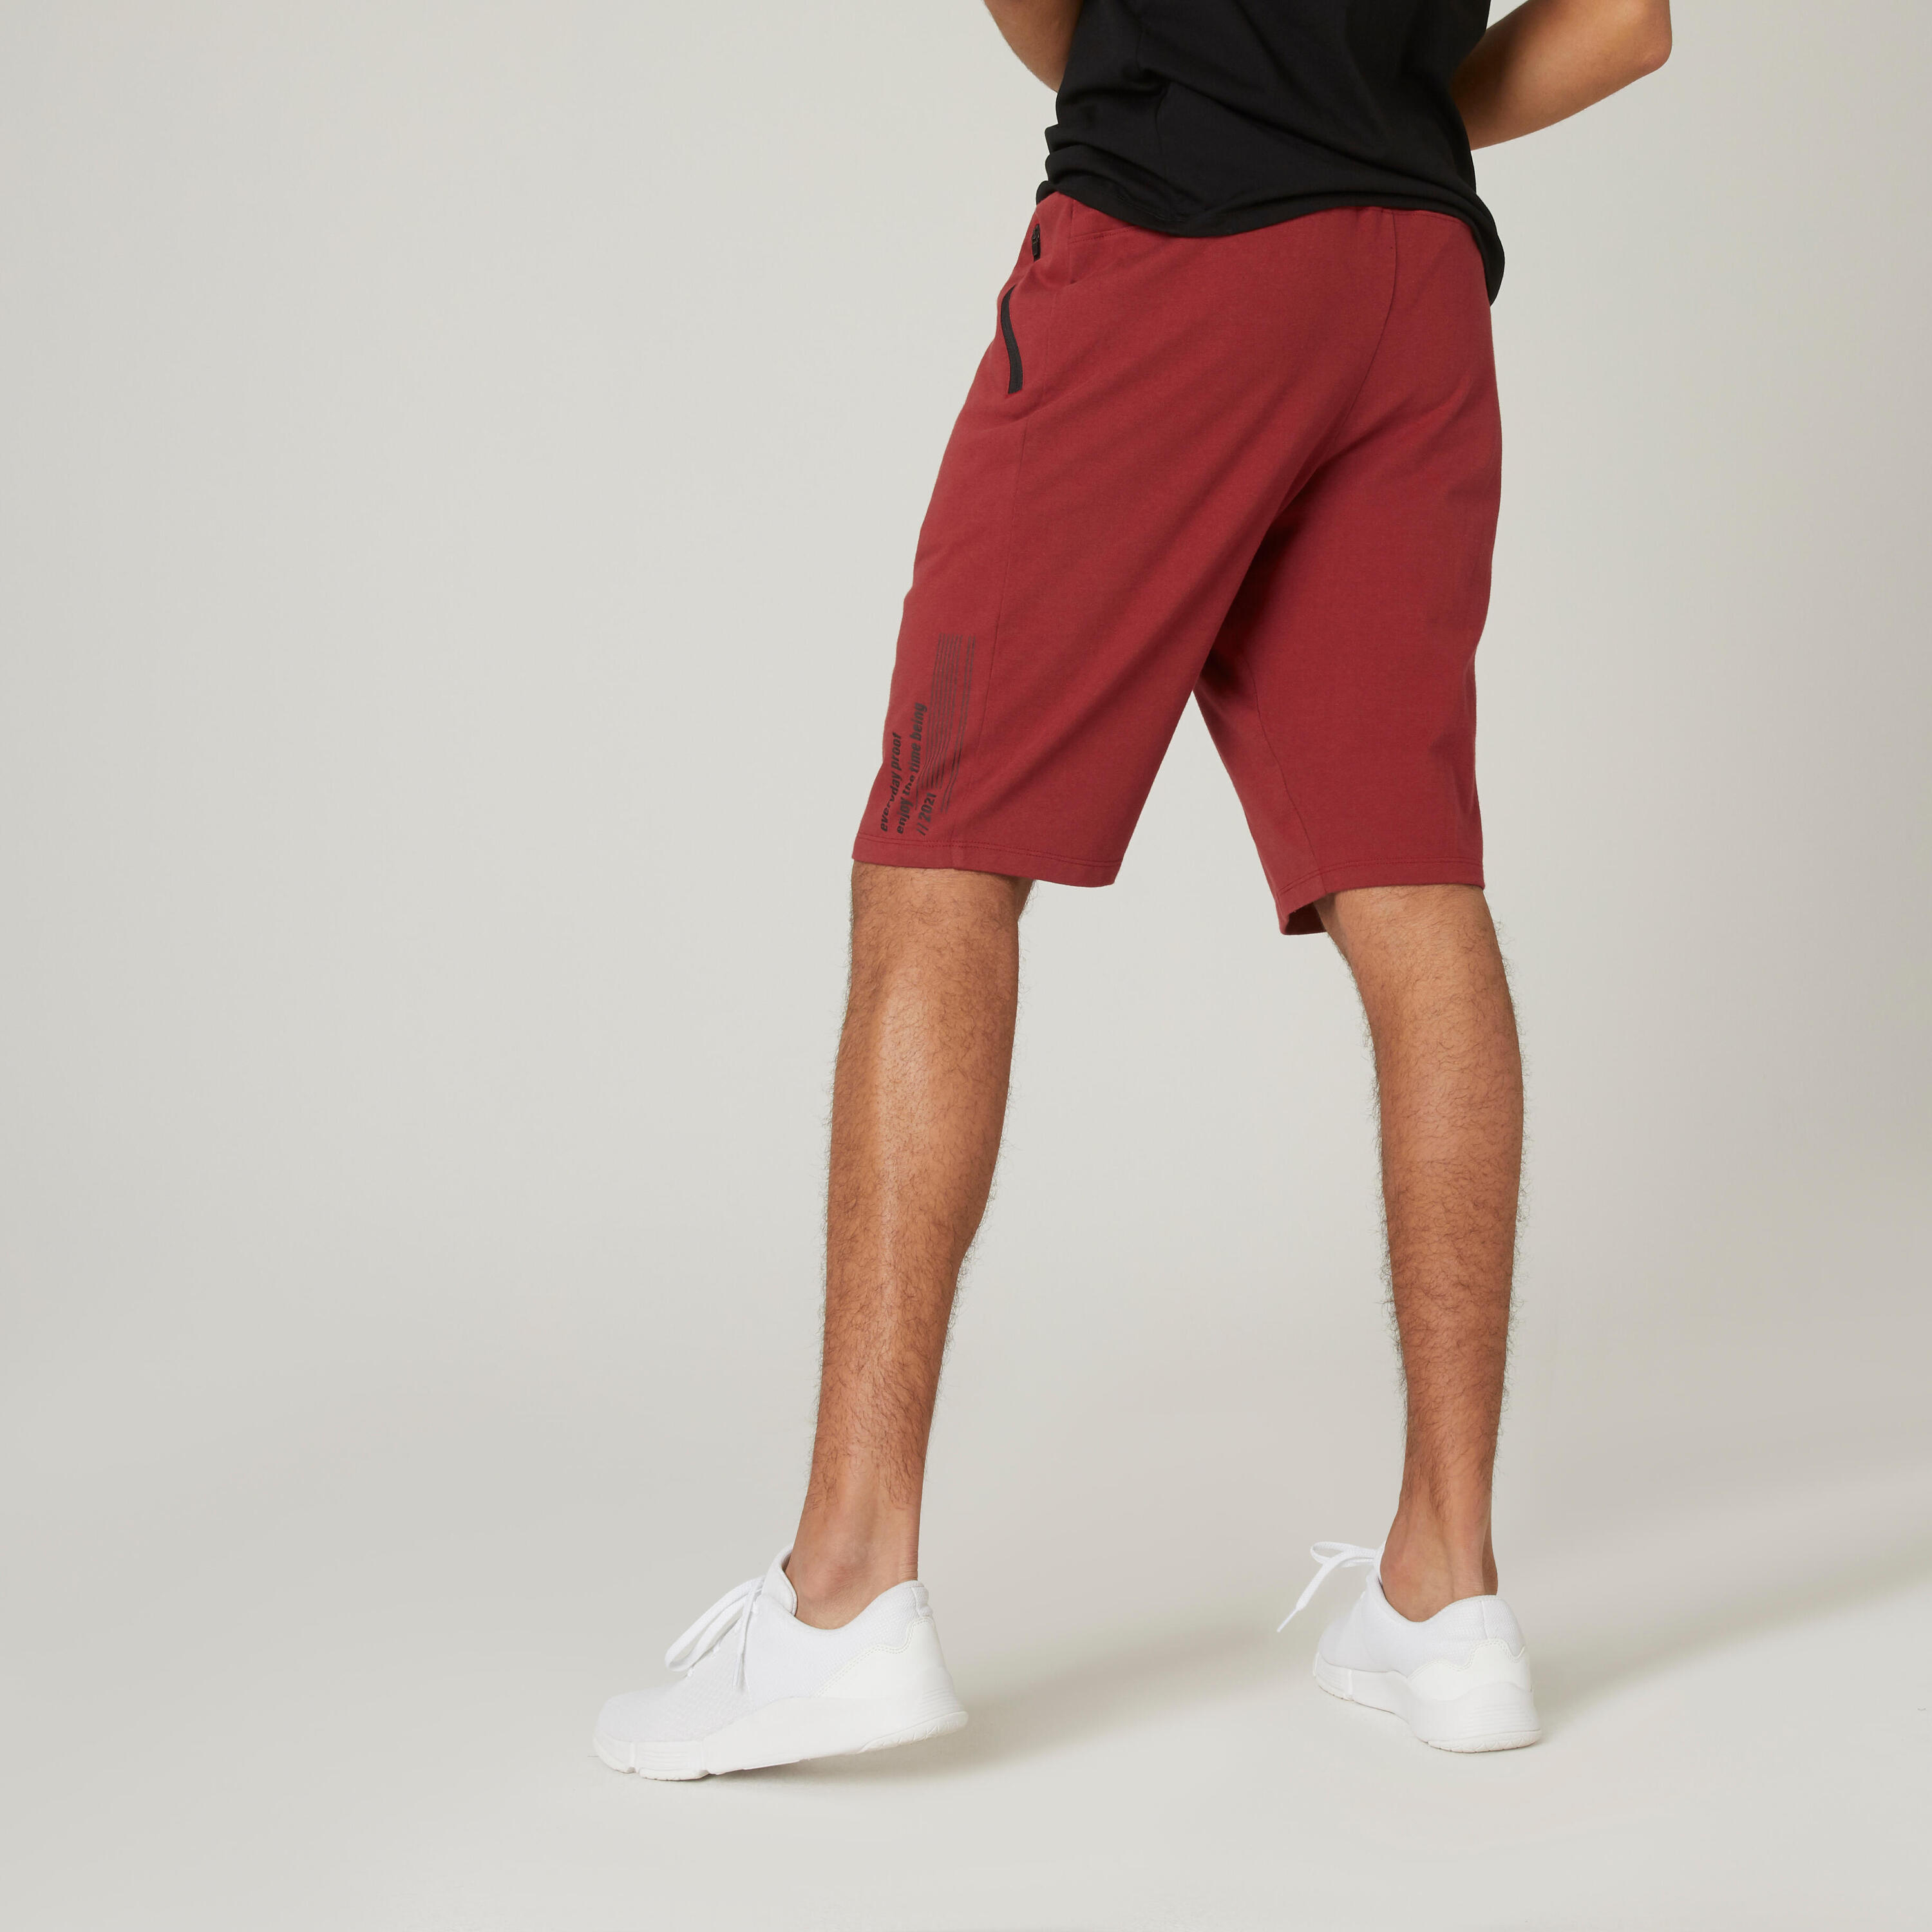 Men's Cotton Blend Shorts - Red 2/8